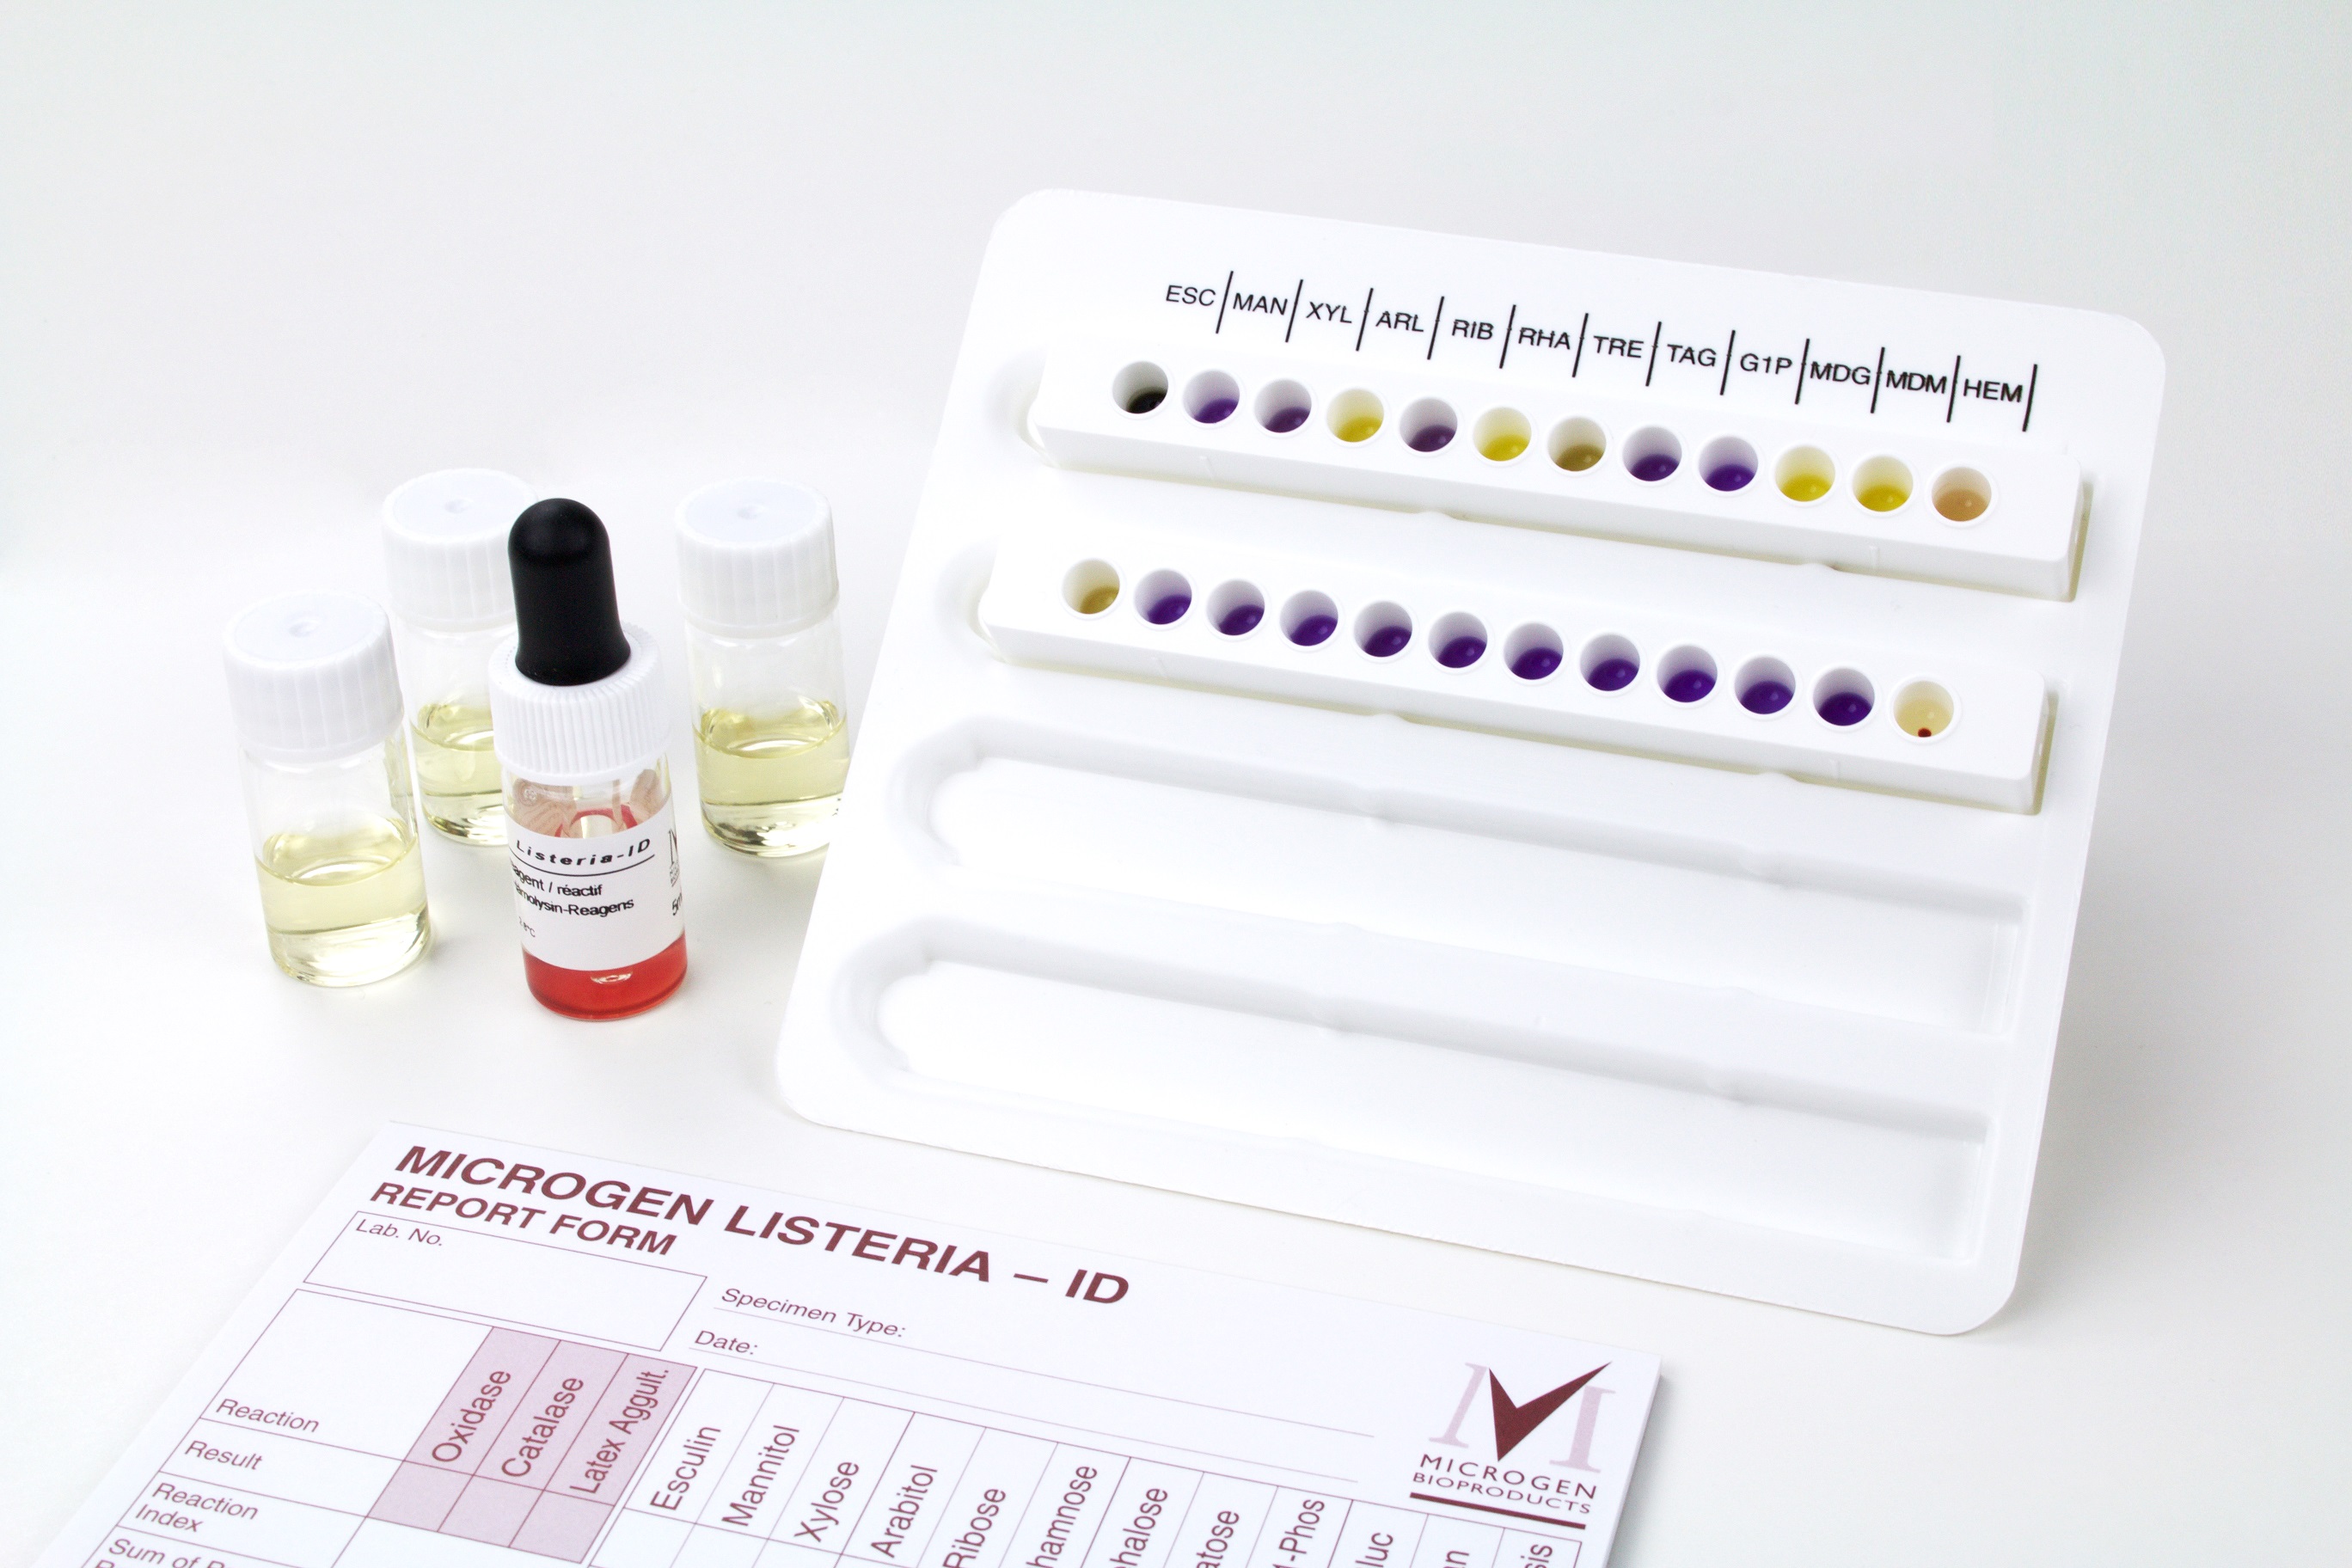 MicrogenTM Listeria-ID